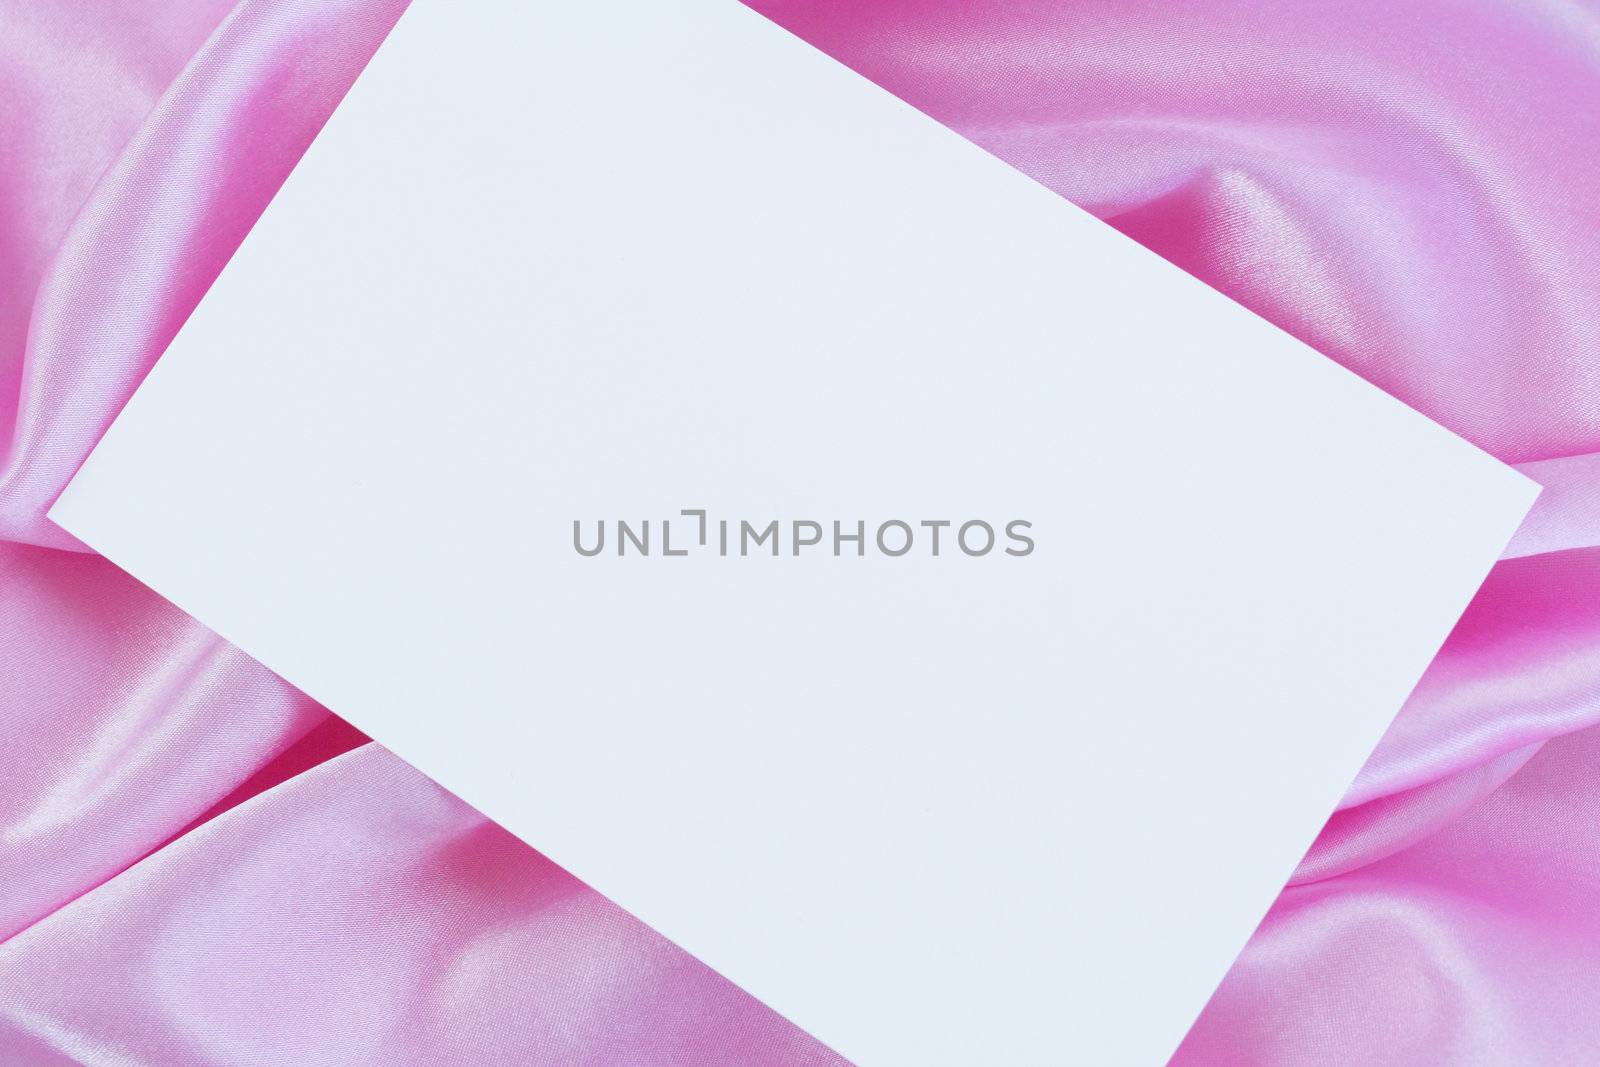 White blank card on pink satin